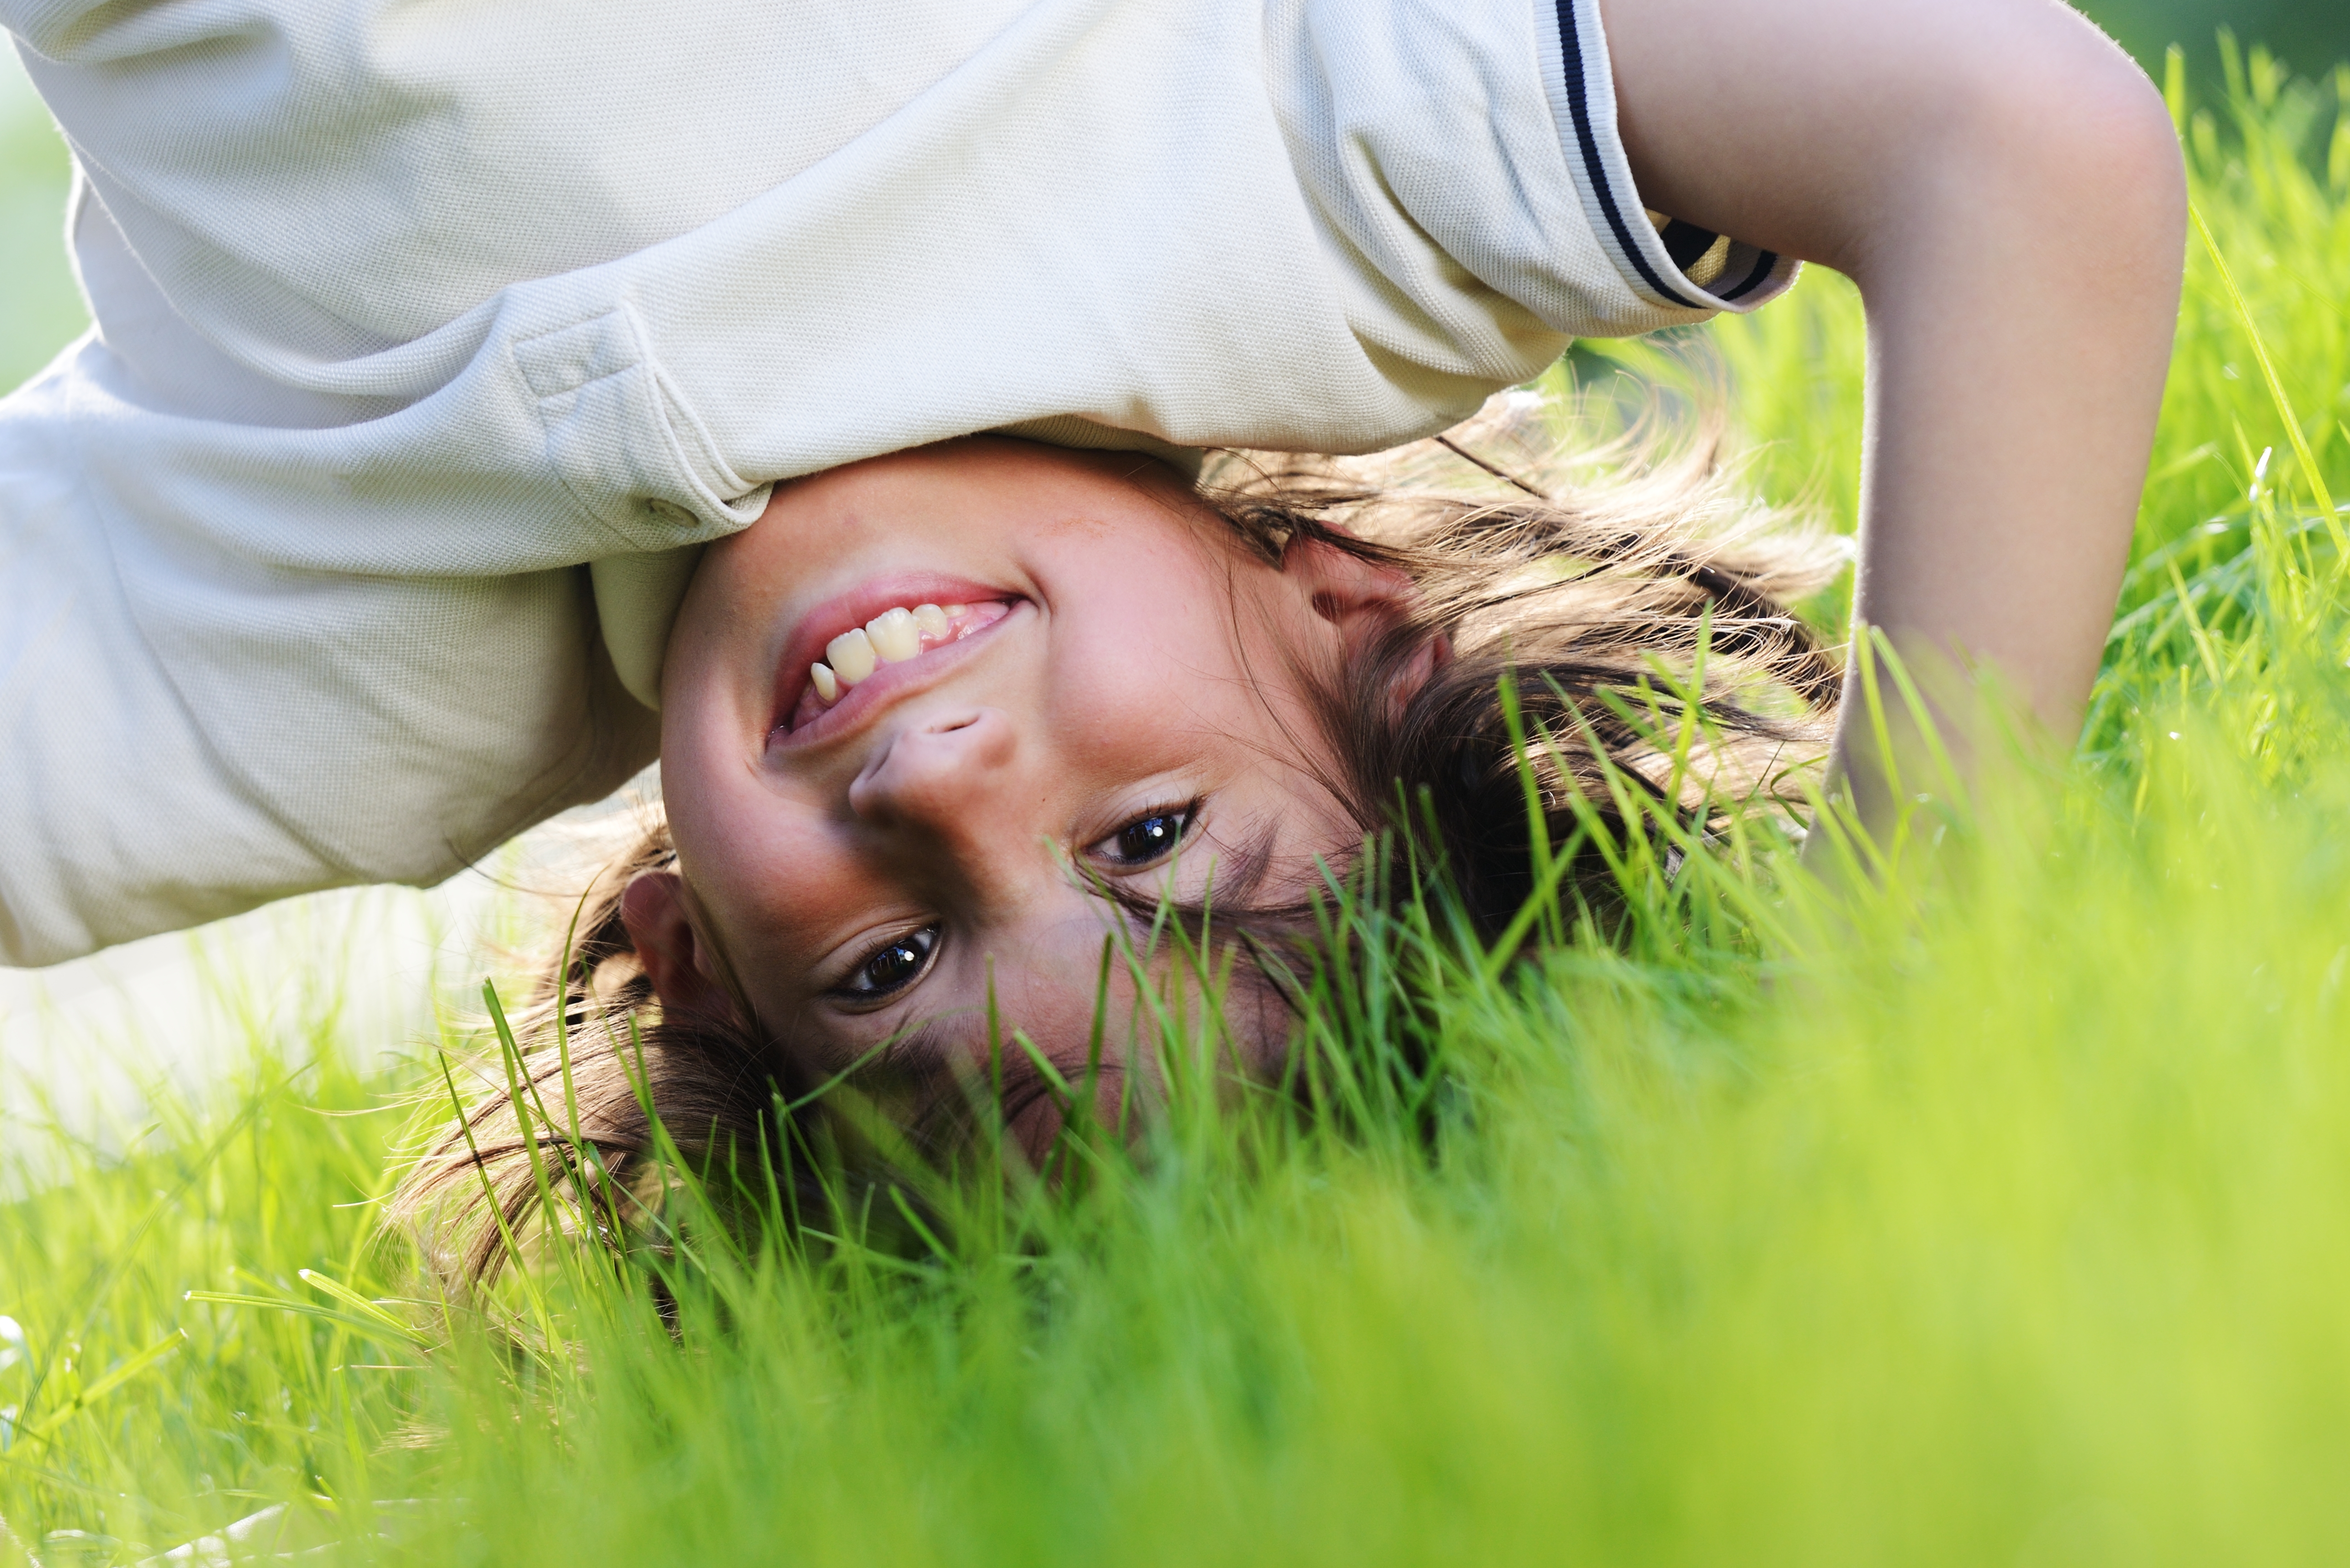 Свежего воздуха род. Радостный ребенок на траве. Счастливые дети на траве. Счастливый ребенок. Дети летом на траве.